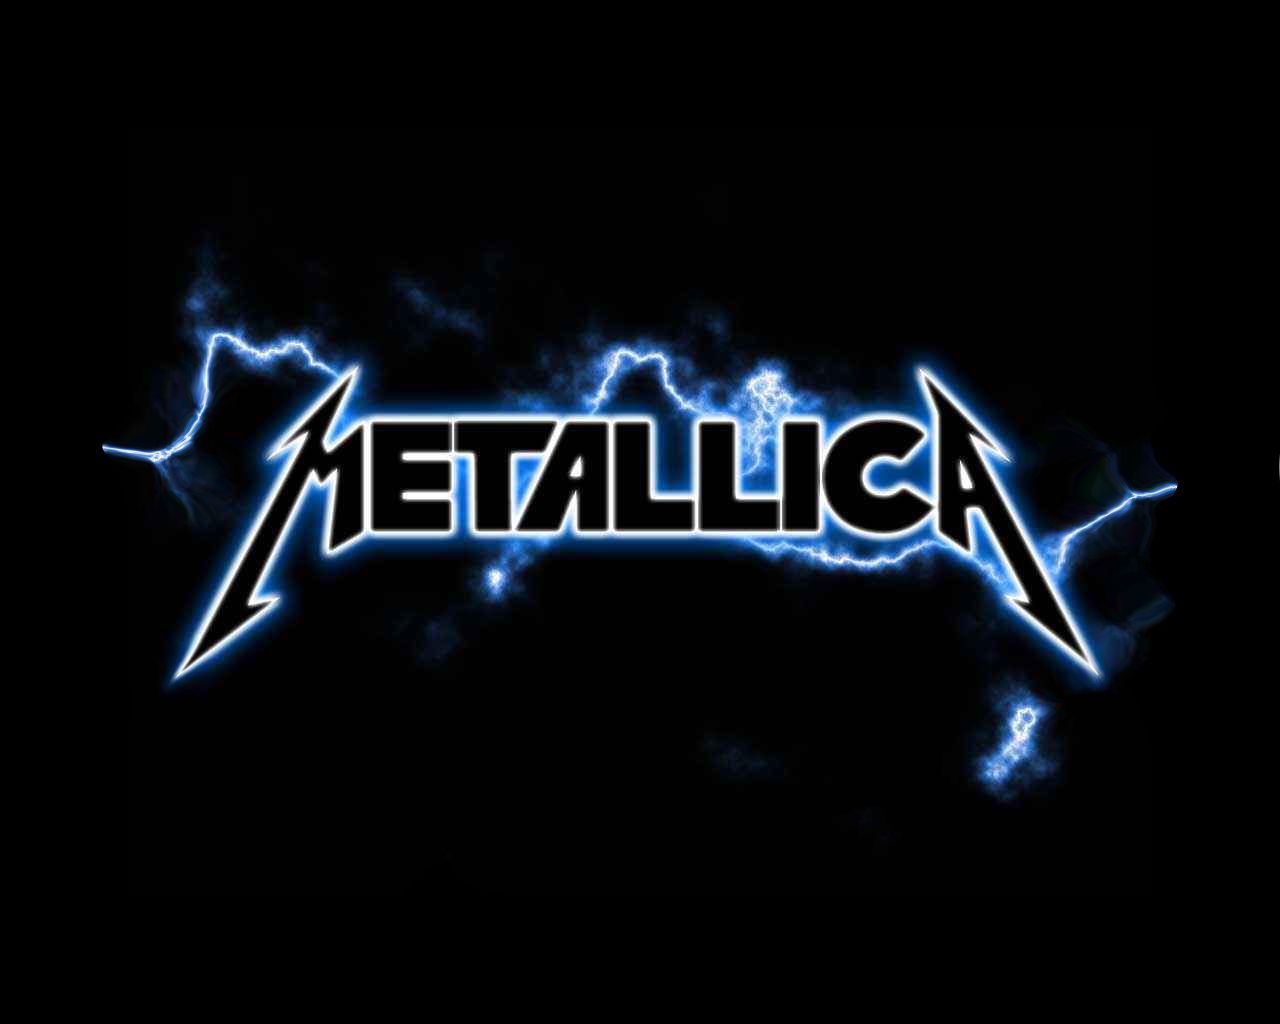 Metallica Live HD Wallpaper 1920x1080 ID43566